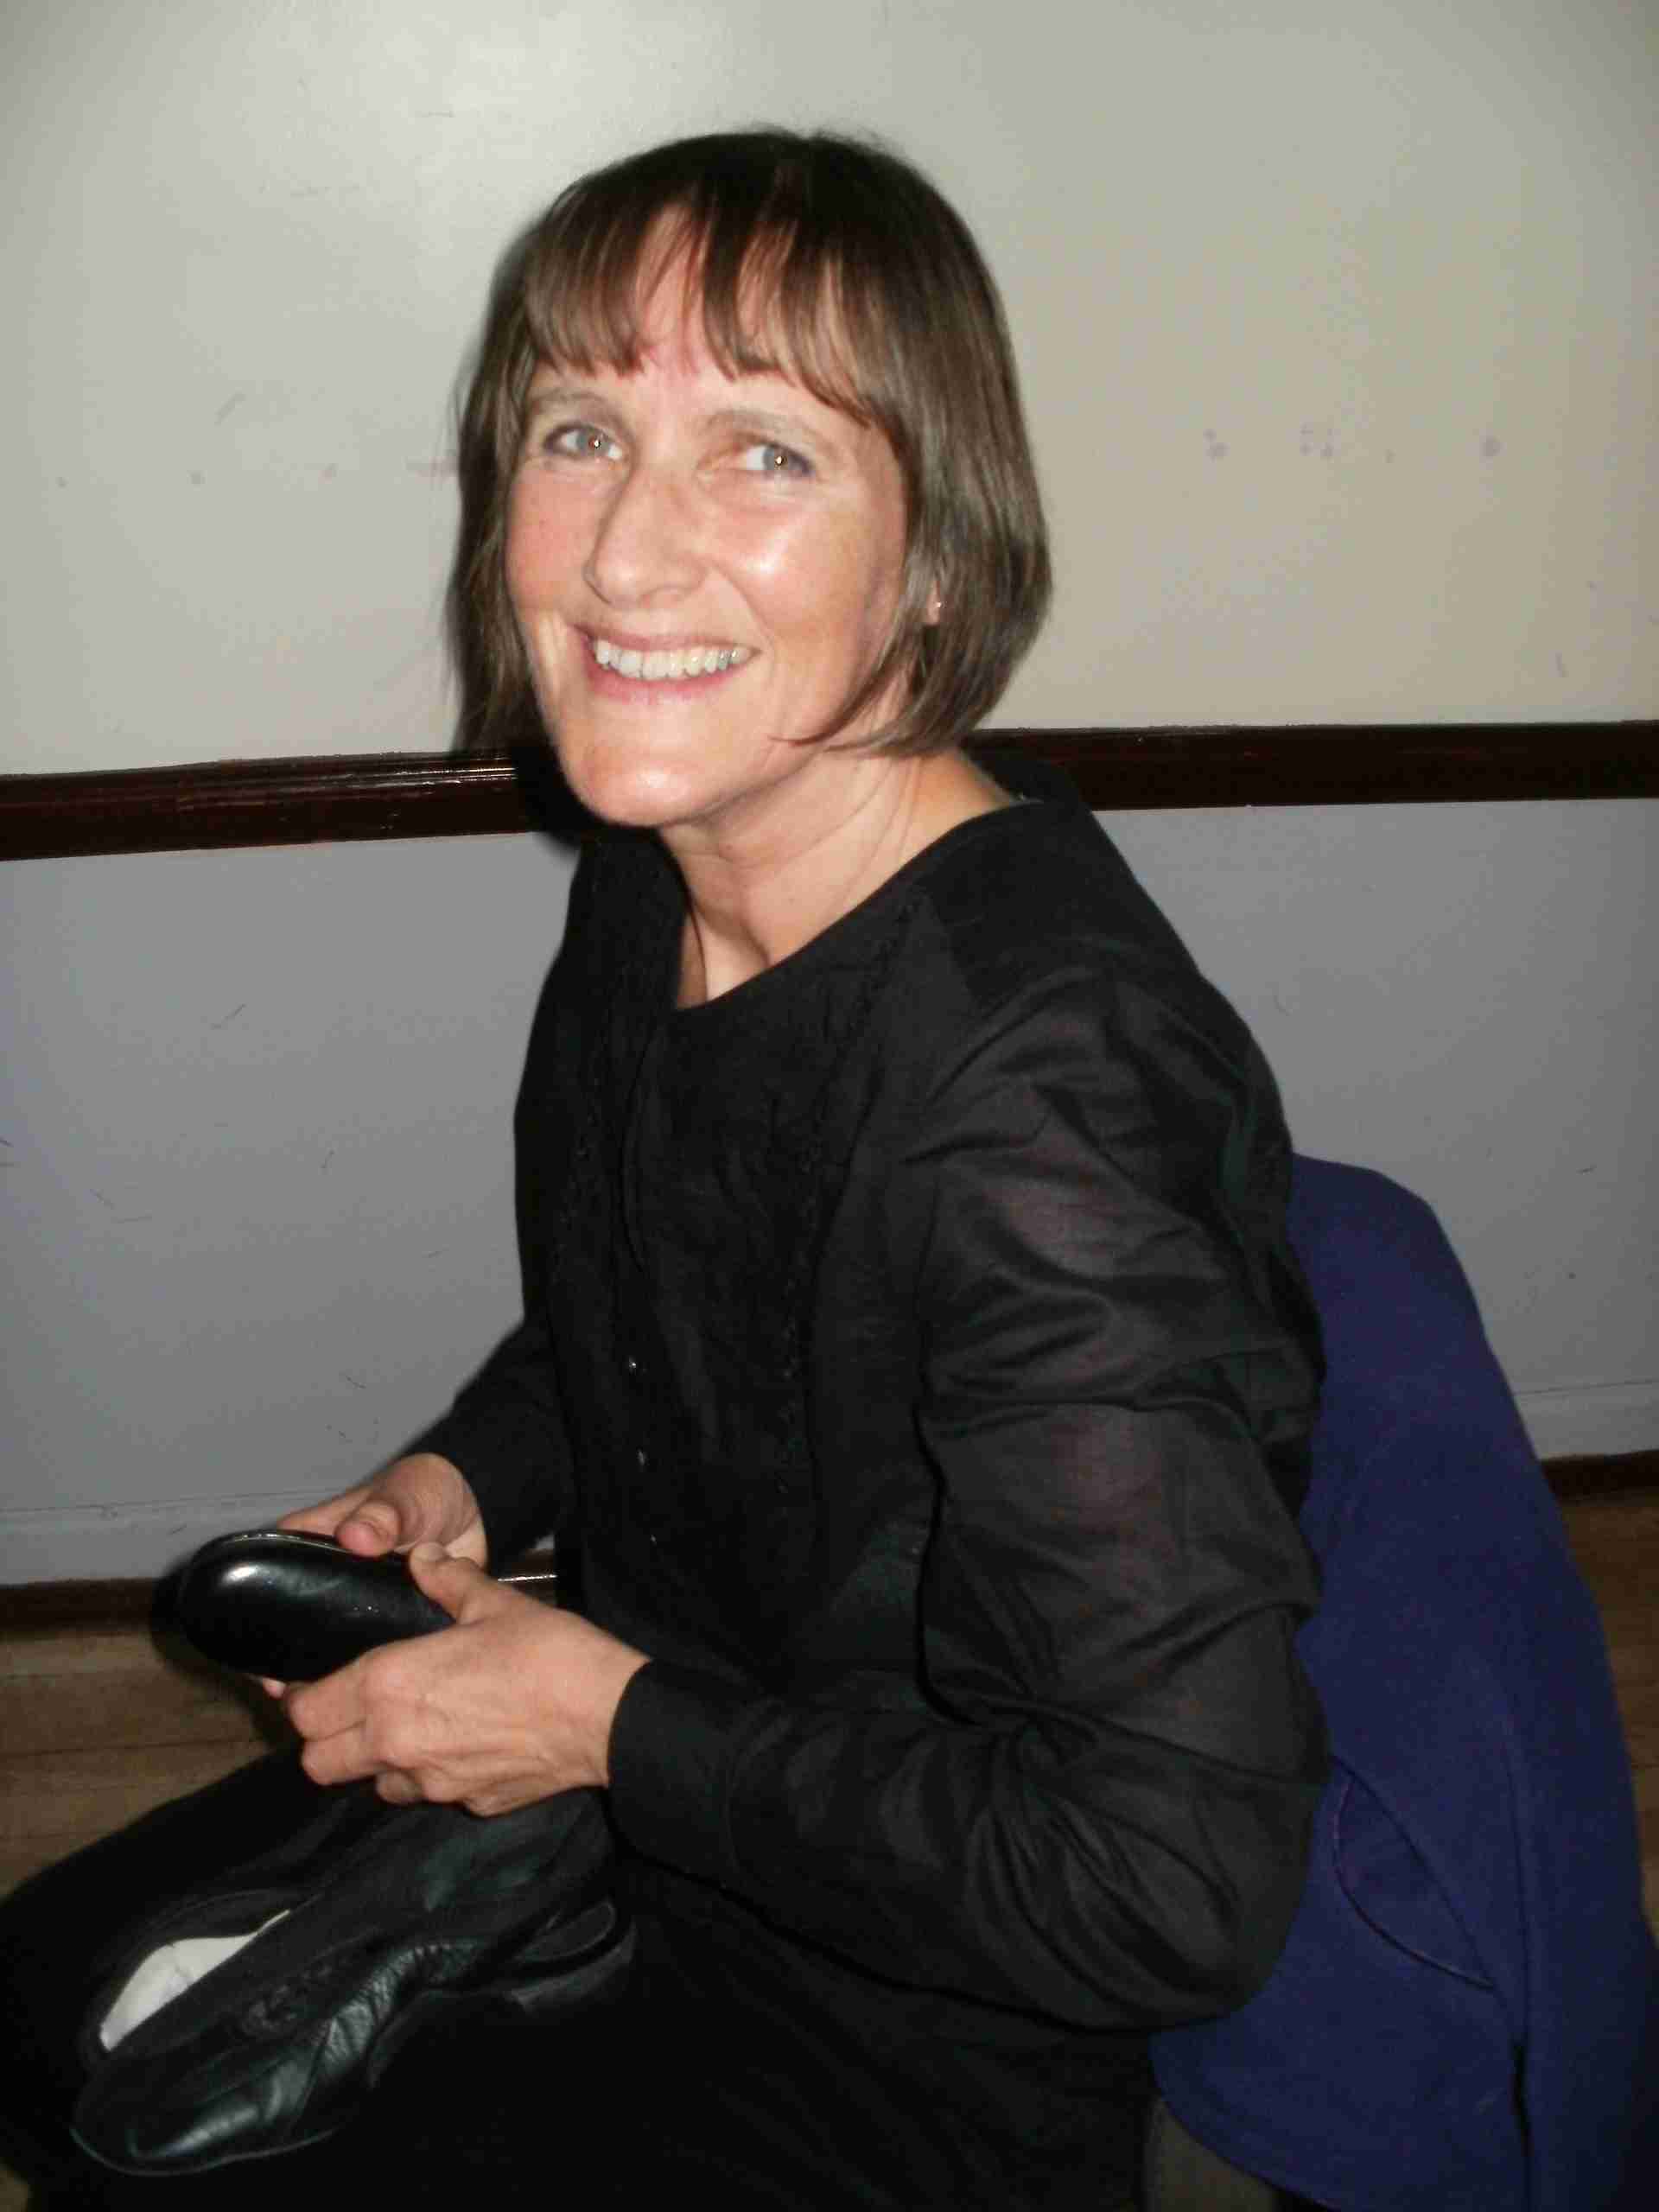 Sue Grahame (dancer) from Westbourne, Dorset